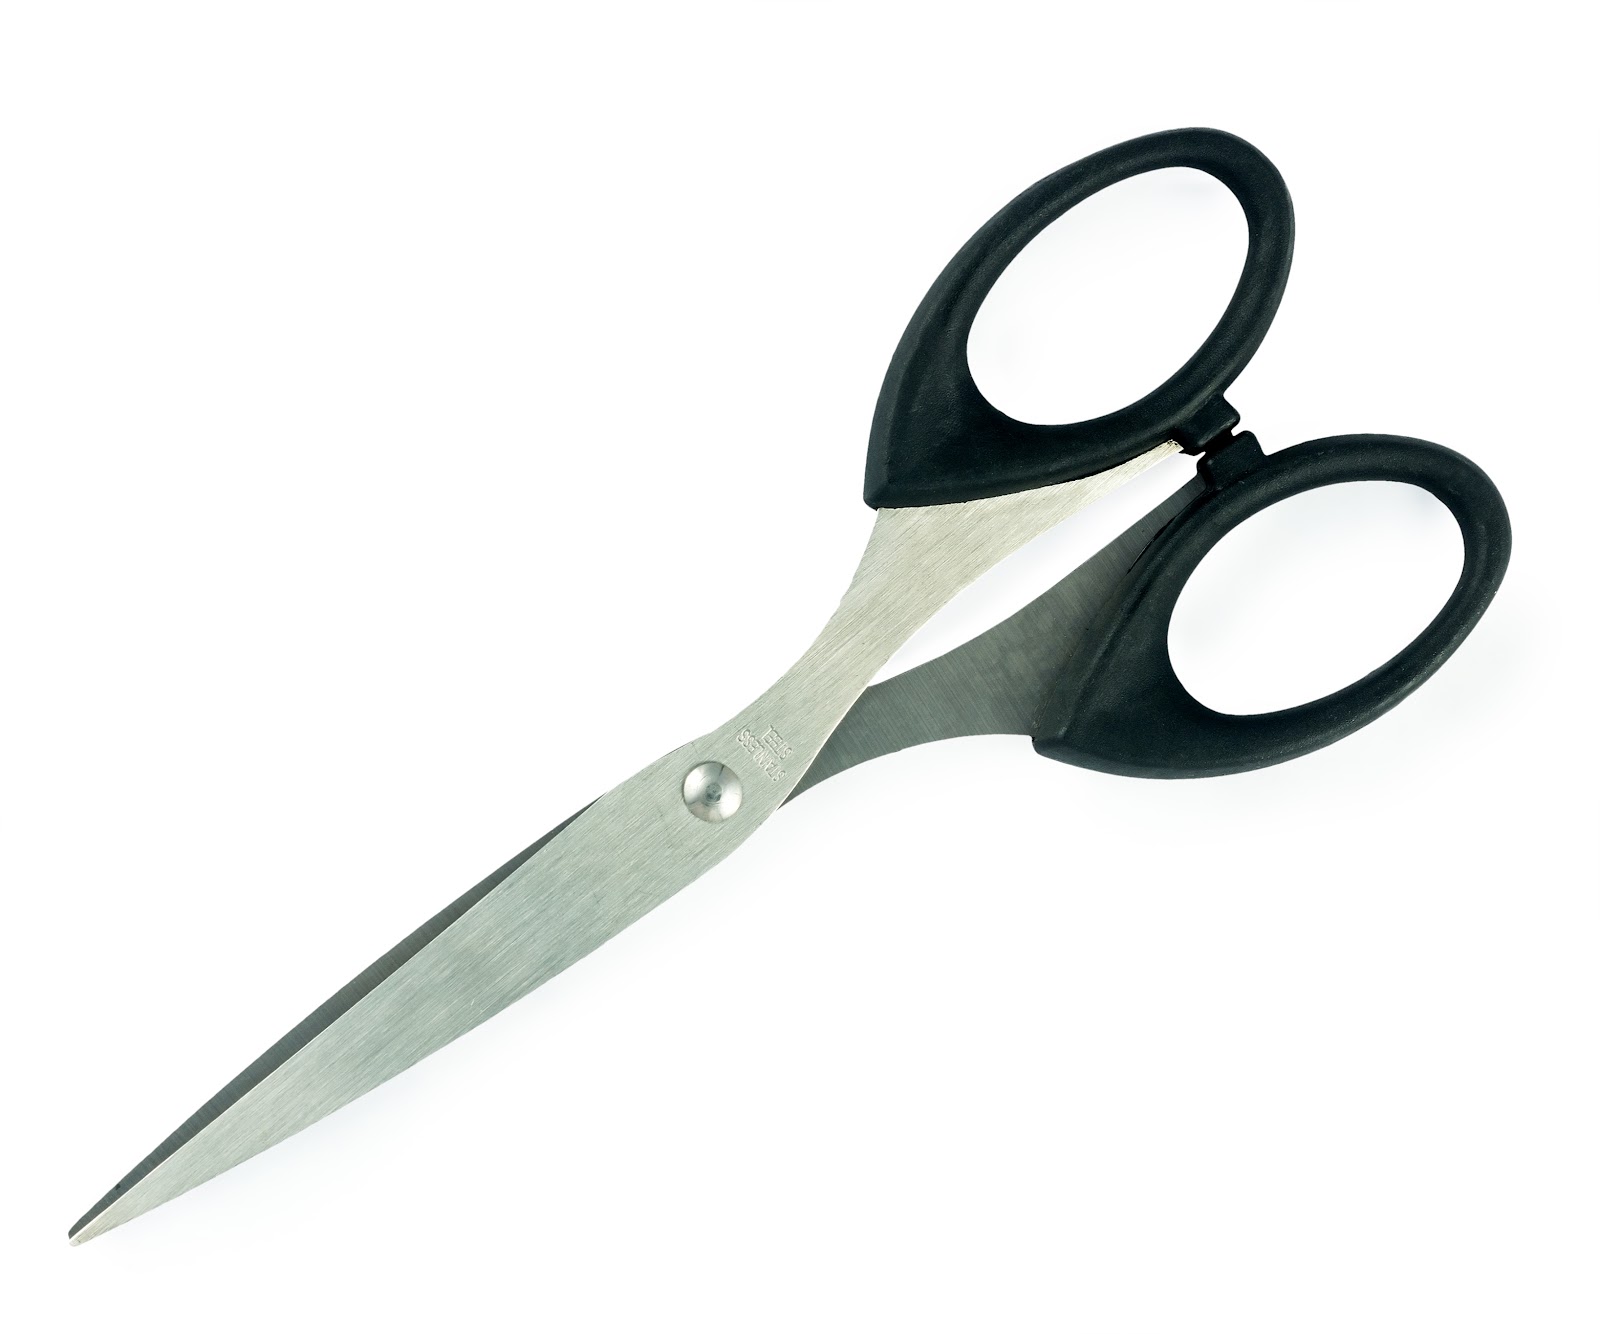 File:Pair of scissors with black handle, 2015-06-07.jpg - Wikipedia